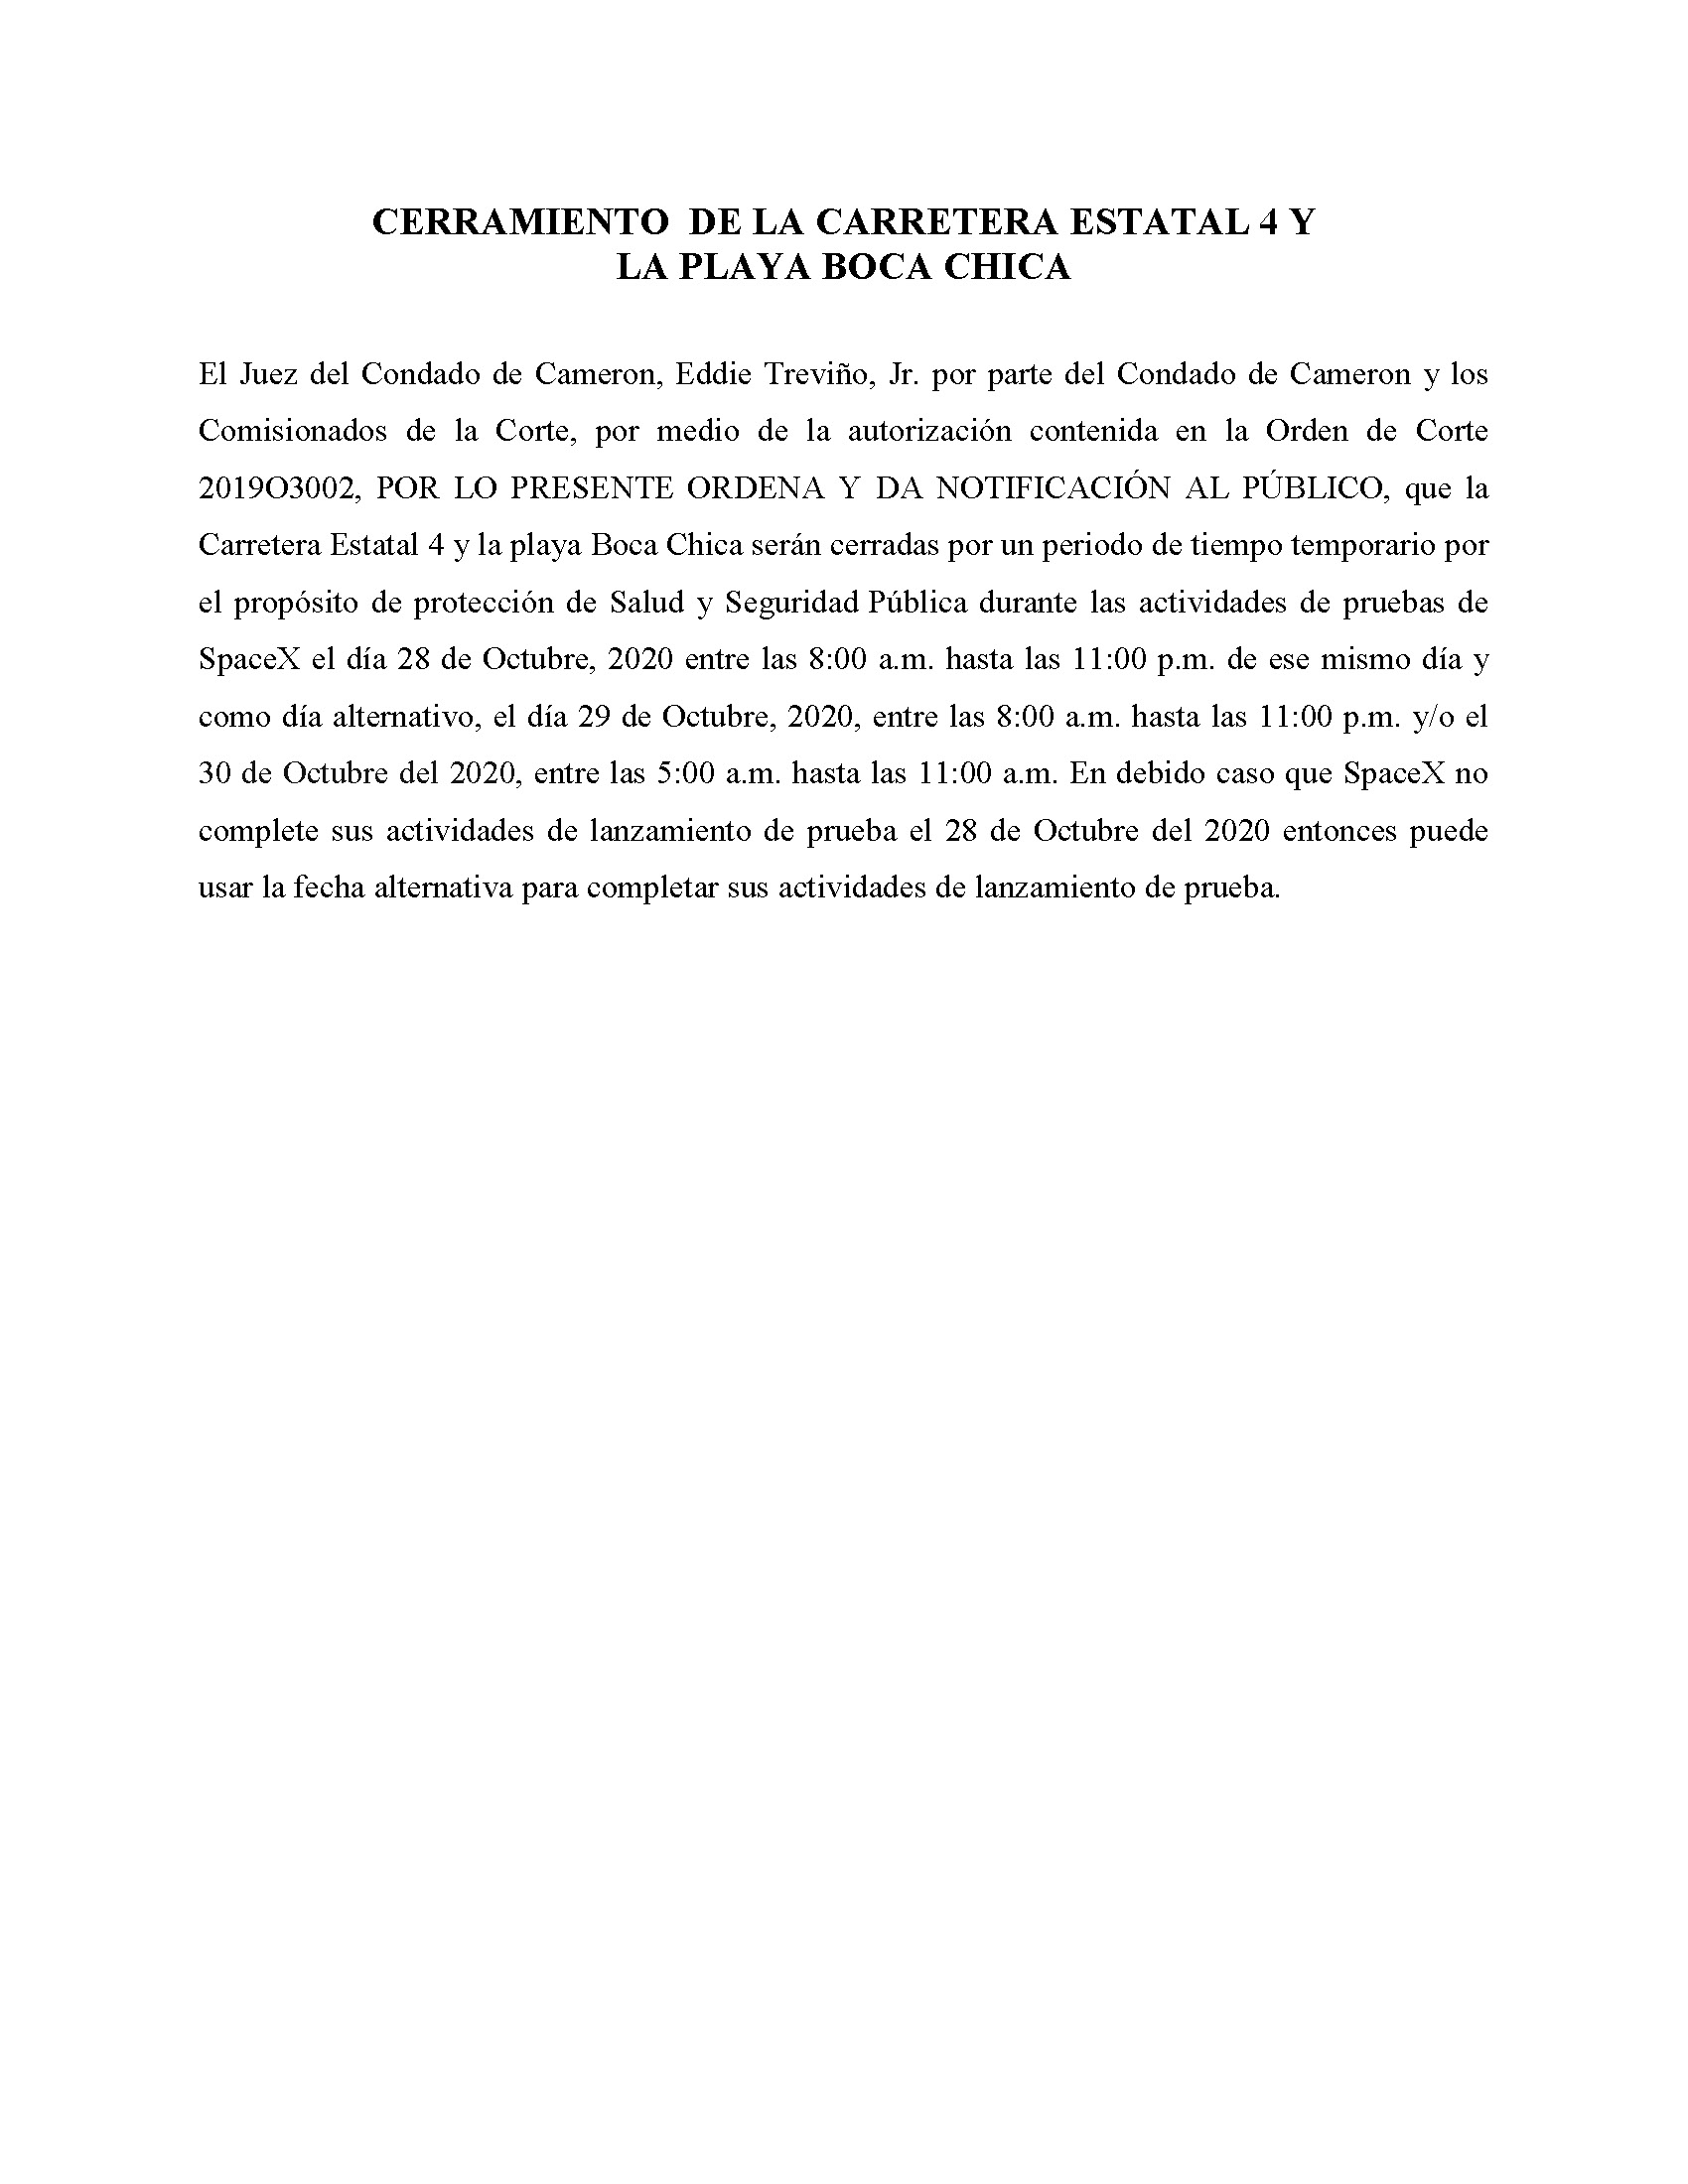 ORDER.CLOSURE OF HIGHWAY 4 Y LA PLAYA BOCA CHICA.SPANISH.10.28.20